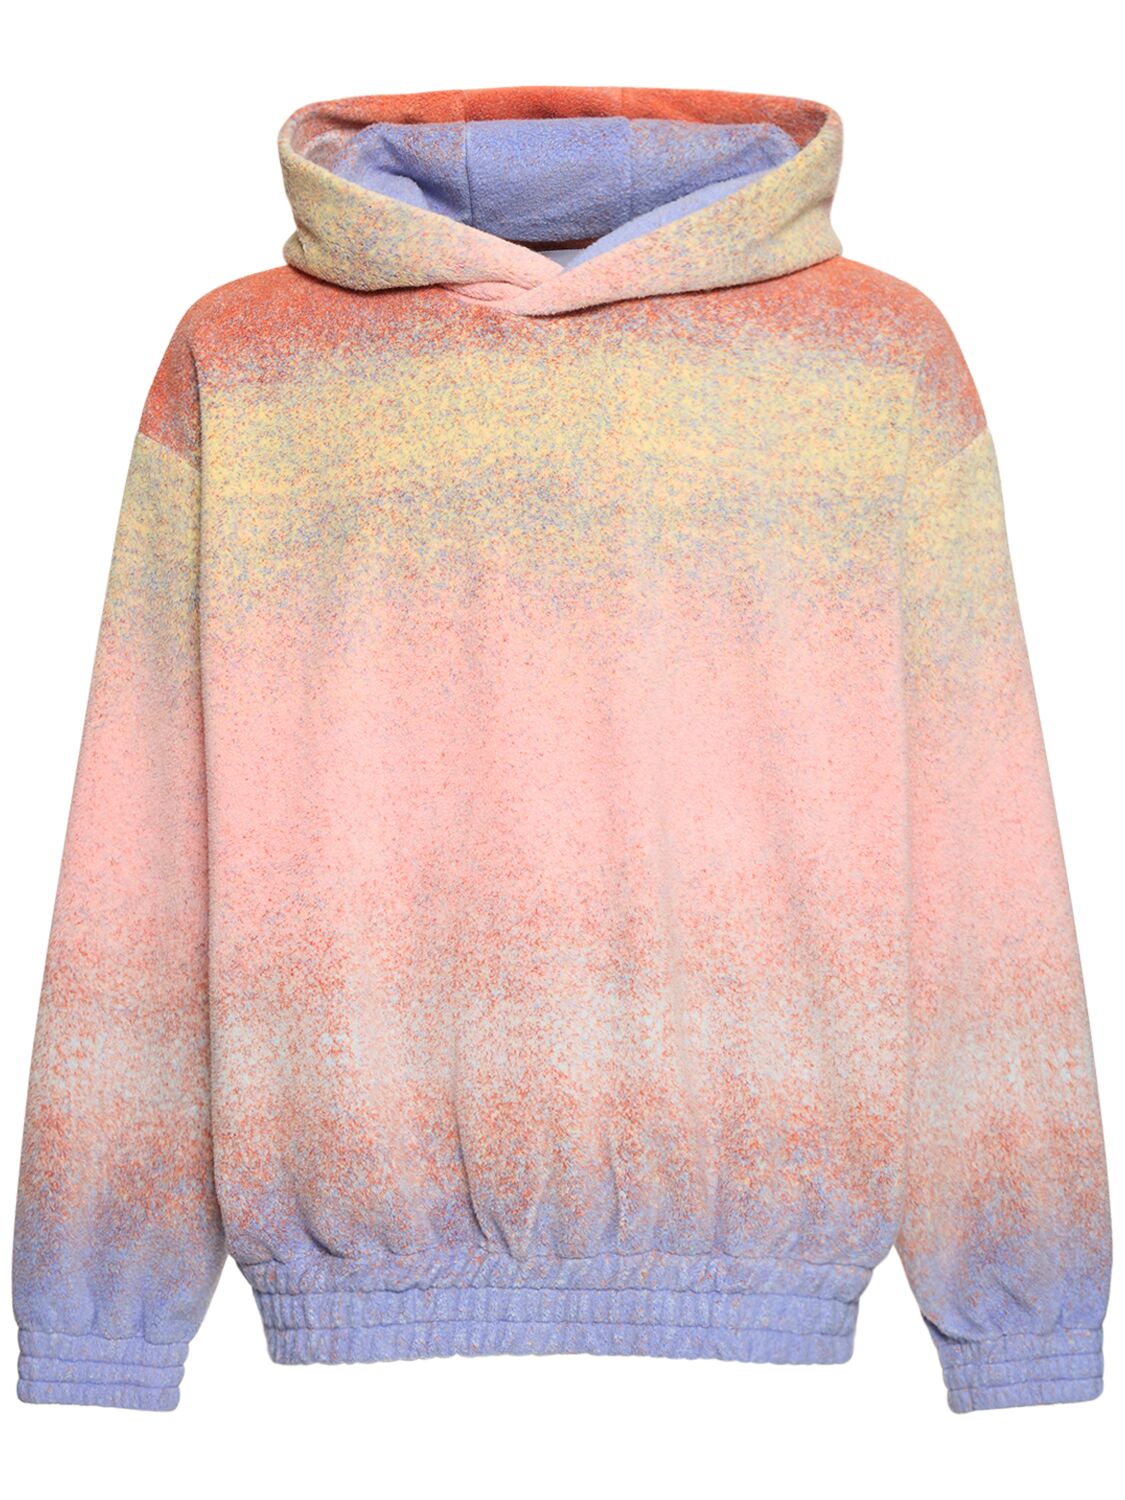 Bonsai Oversize Degradé Knit Hooded Sweater In Sunset